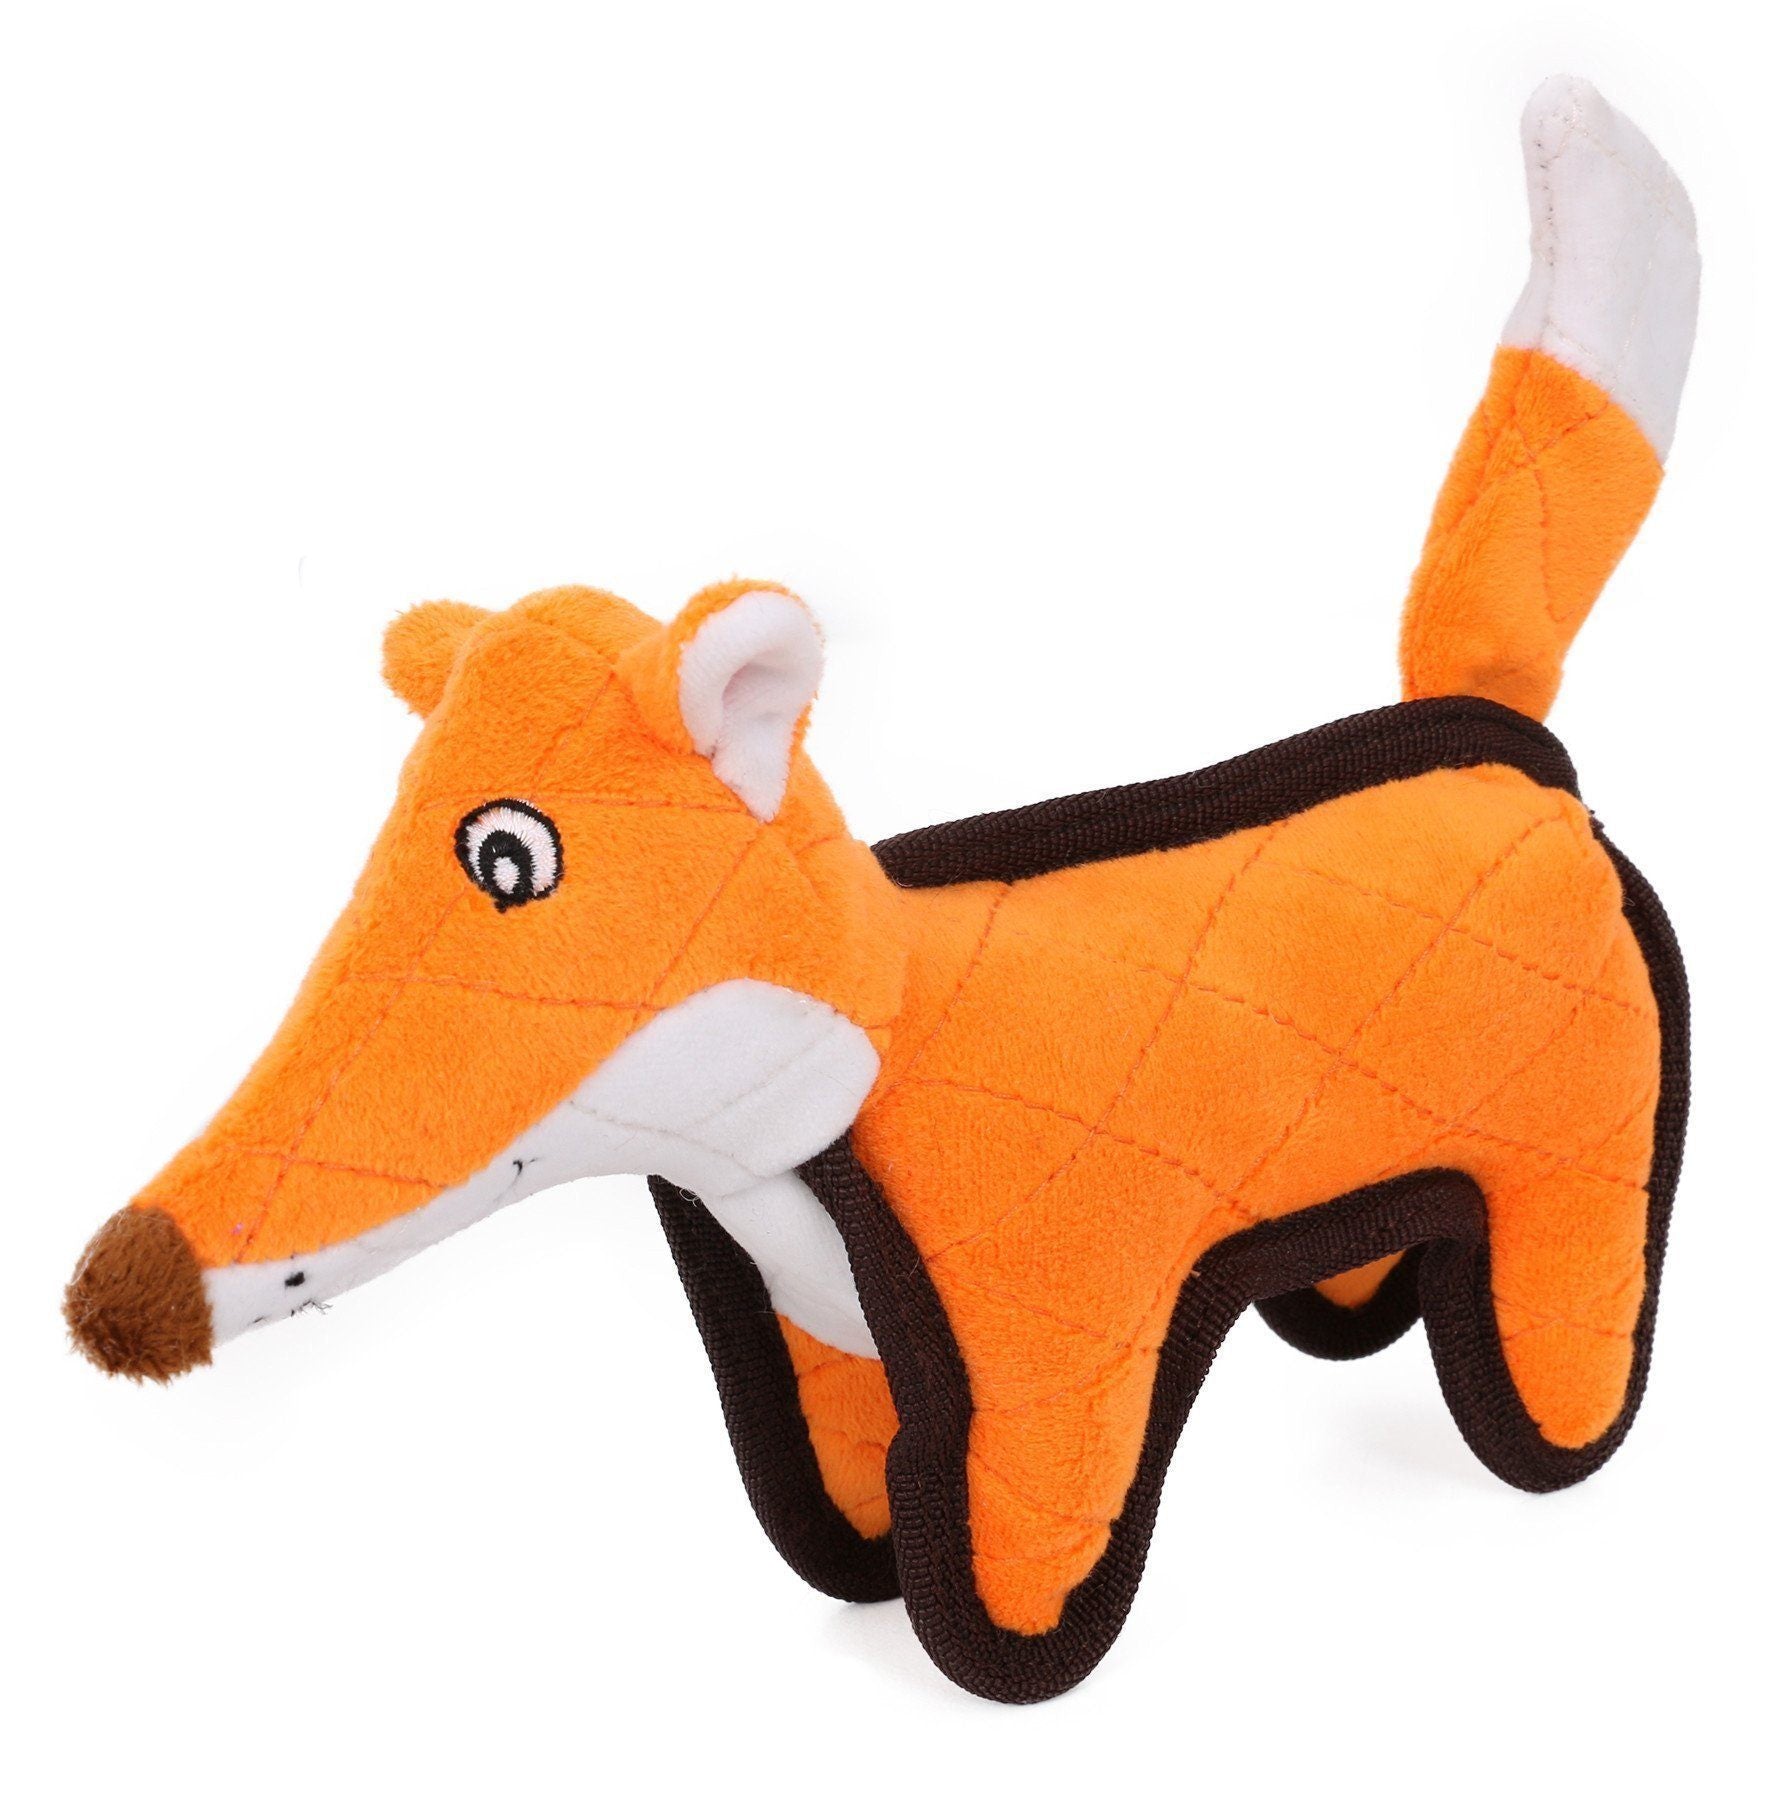 Pet Life ® 'Foxy-Tail' Animated Nylon Quilted Squeaker Plush Dog Toy Orange 